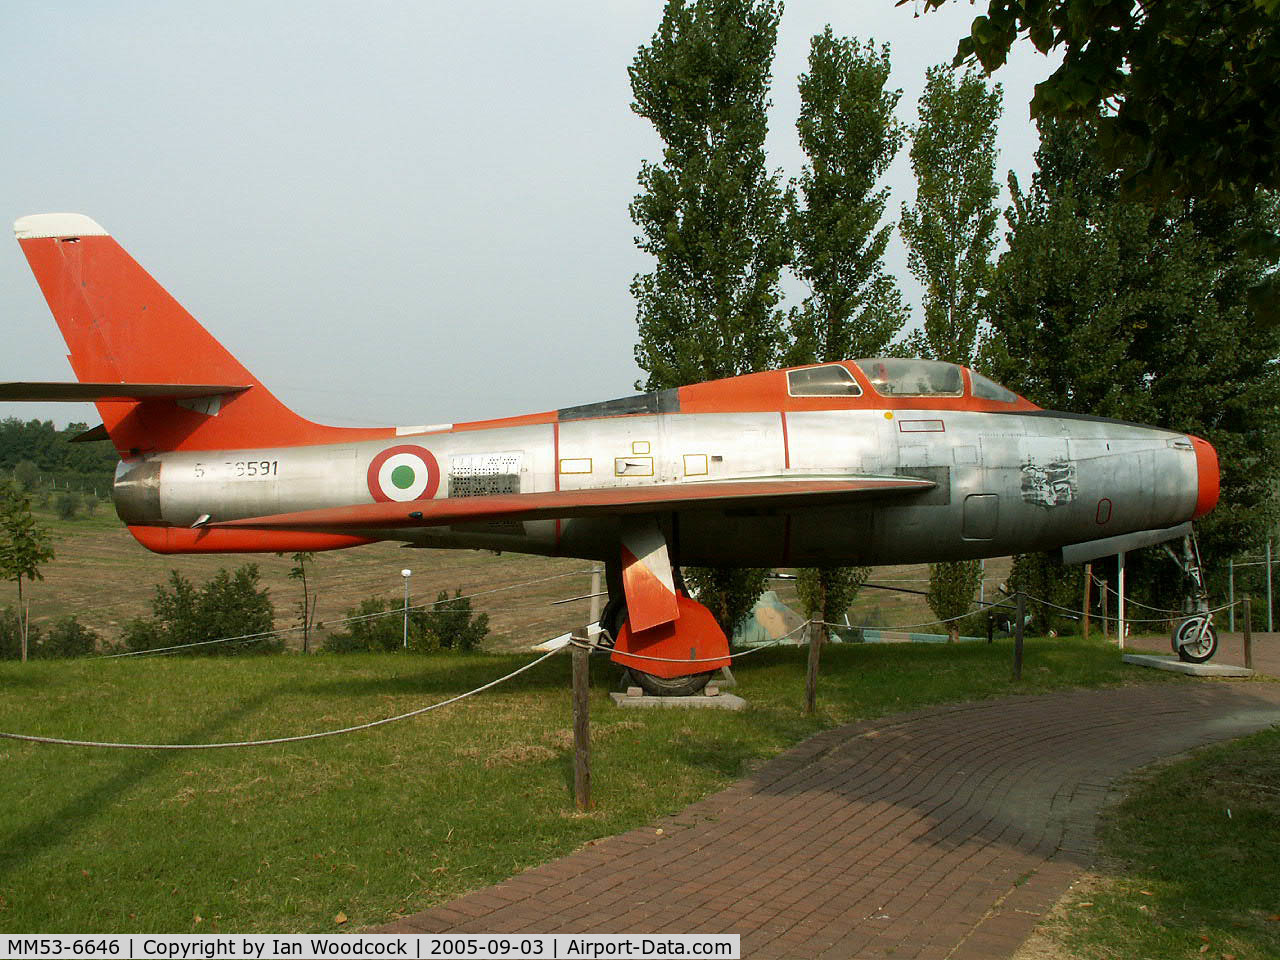 MM53-6646, Republic F-84F Thunderstreak C/N Not found (53-6646), Republic F-84F/Preserved/Cerbaiola,Emilia-Romagna (marked as MM53-6591)